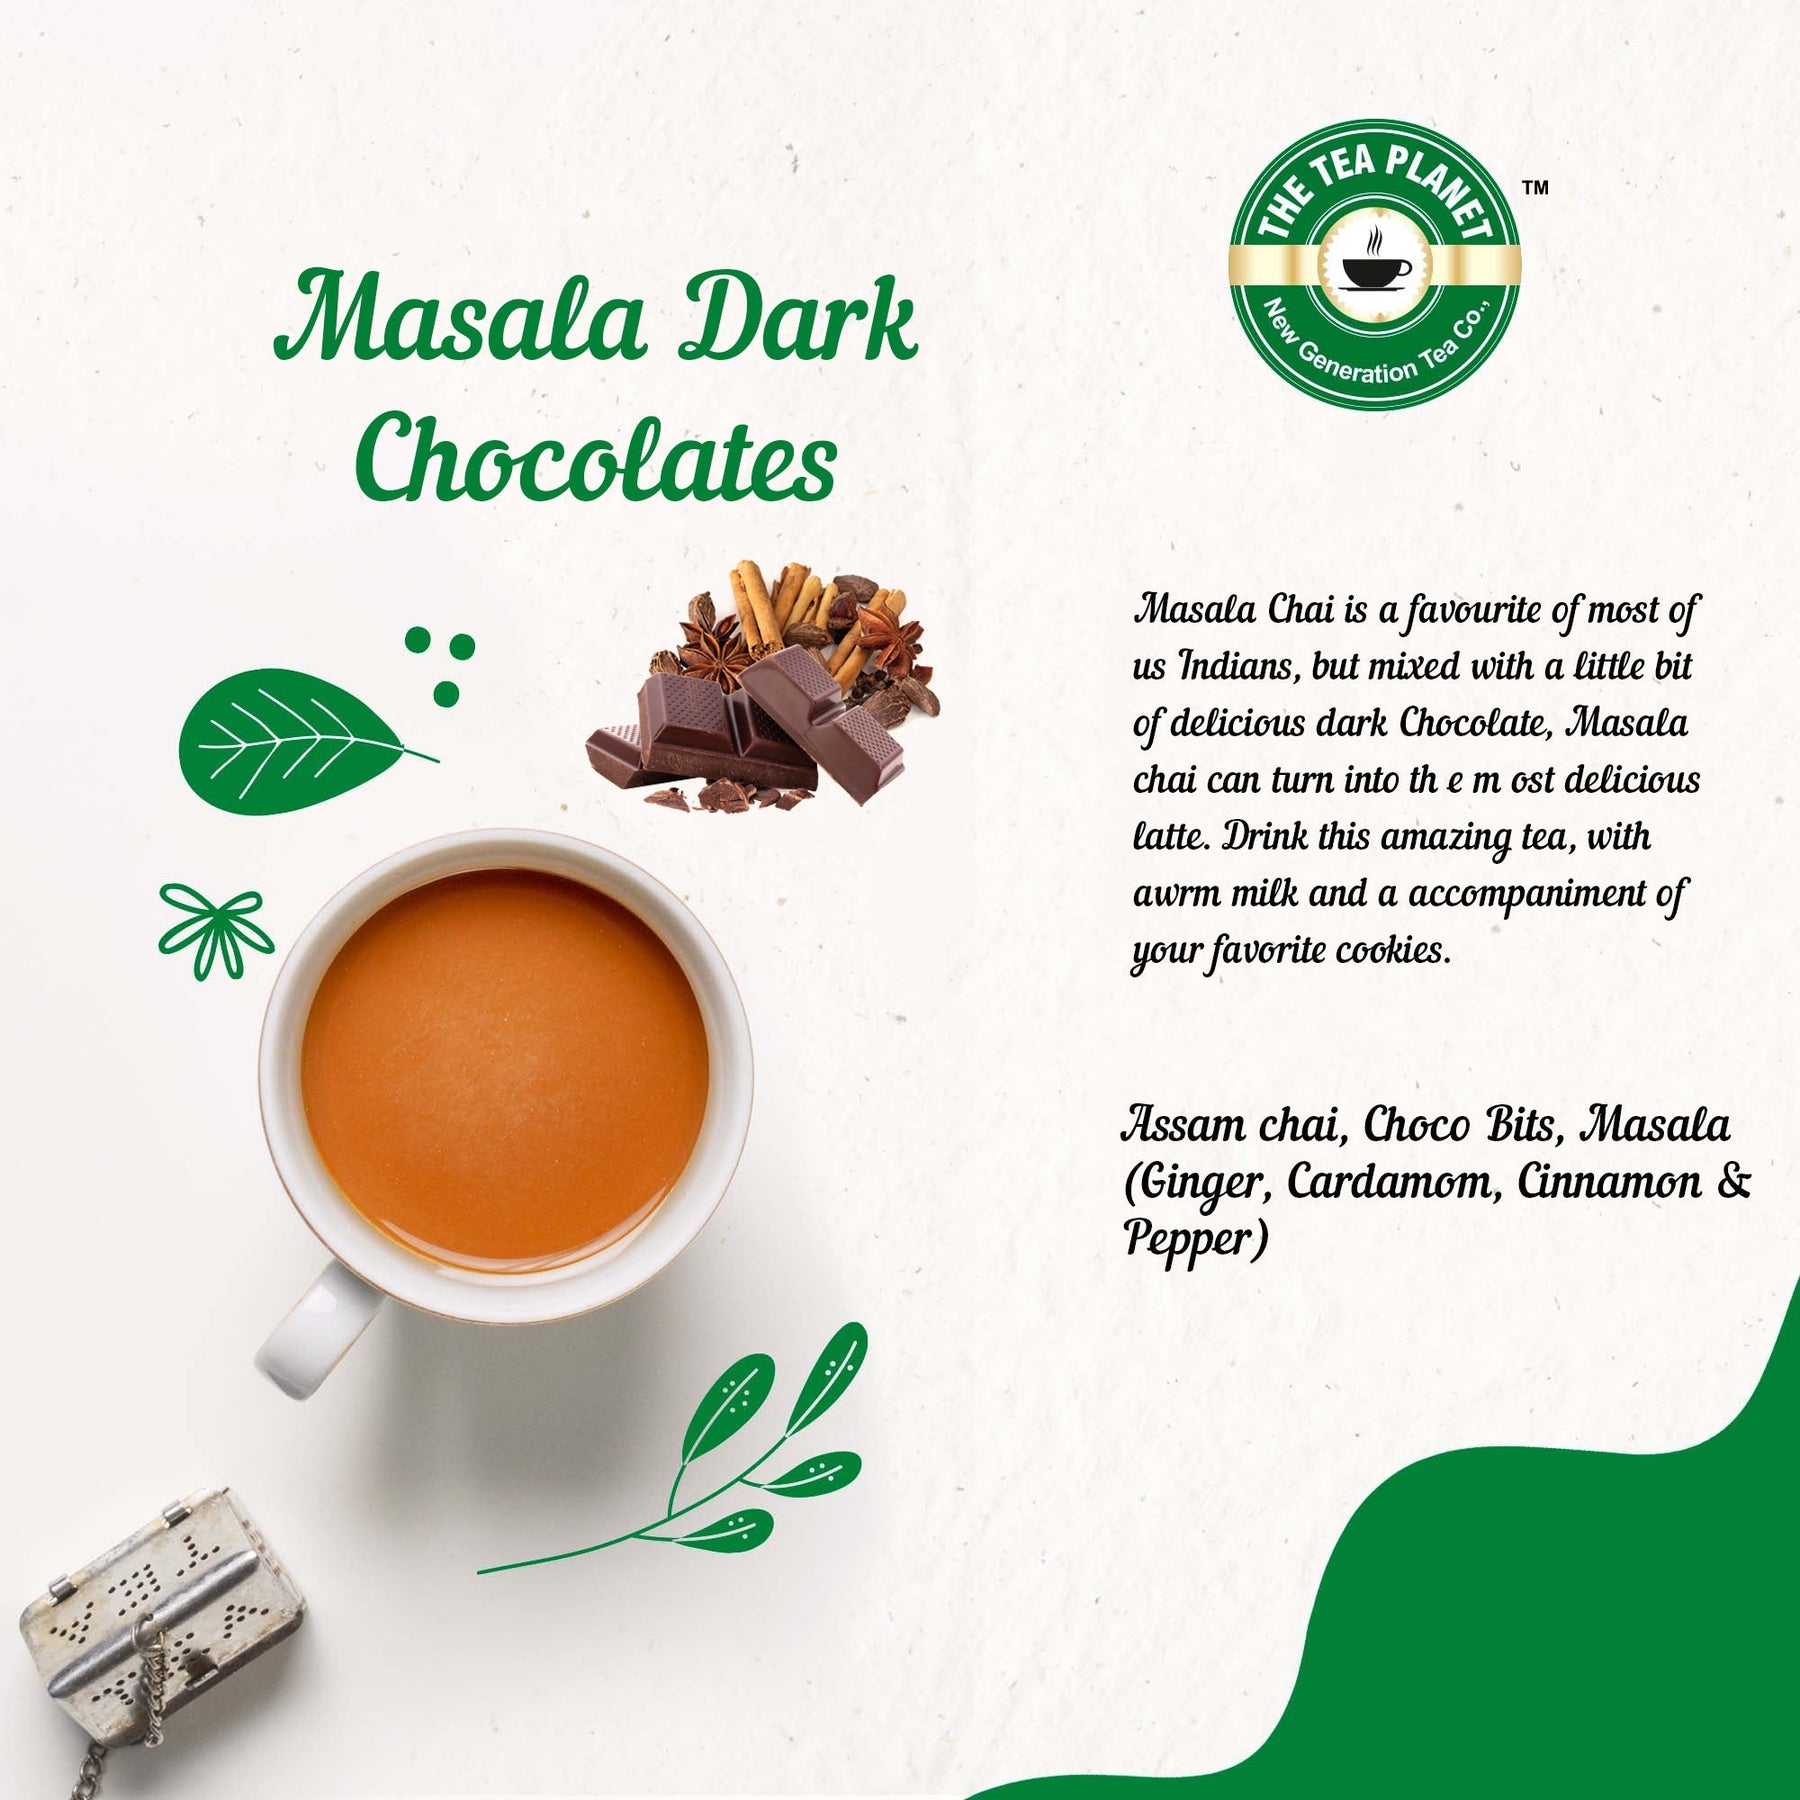 Masala Dark Chocolates CTC Tea 3